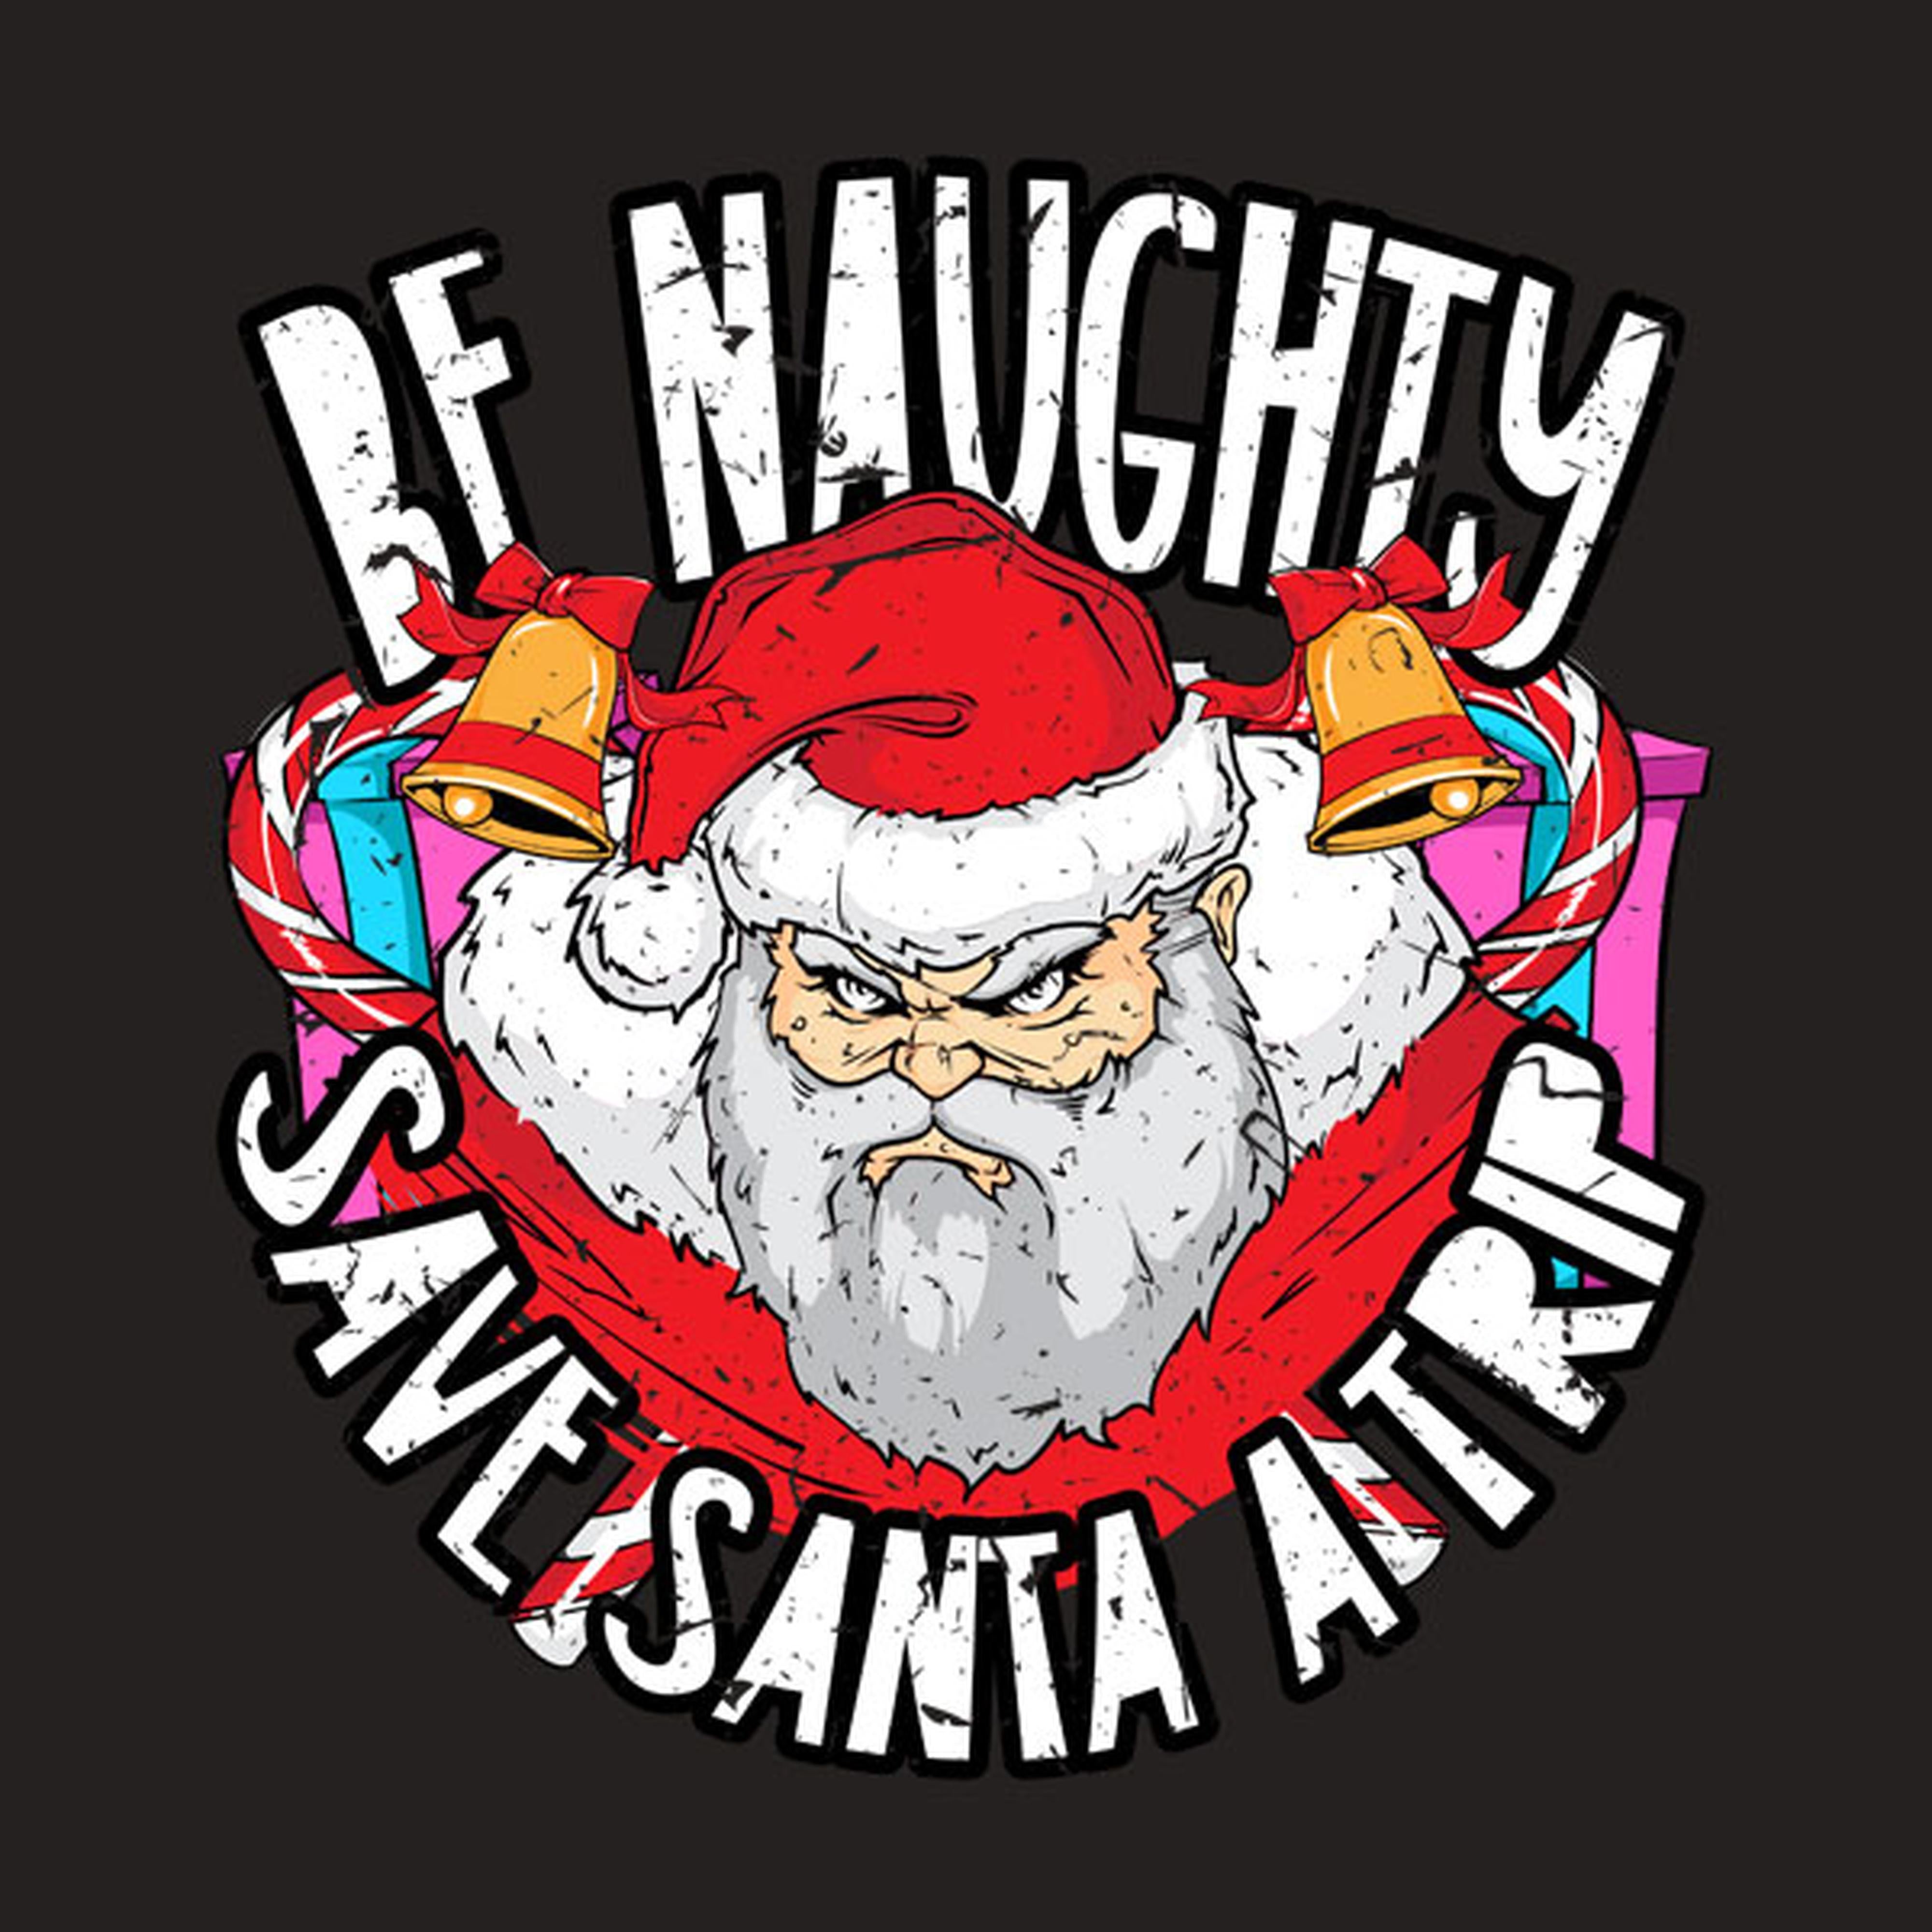 Save Santa a trip - T-shirt